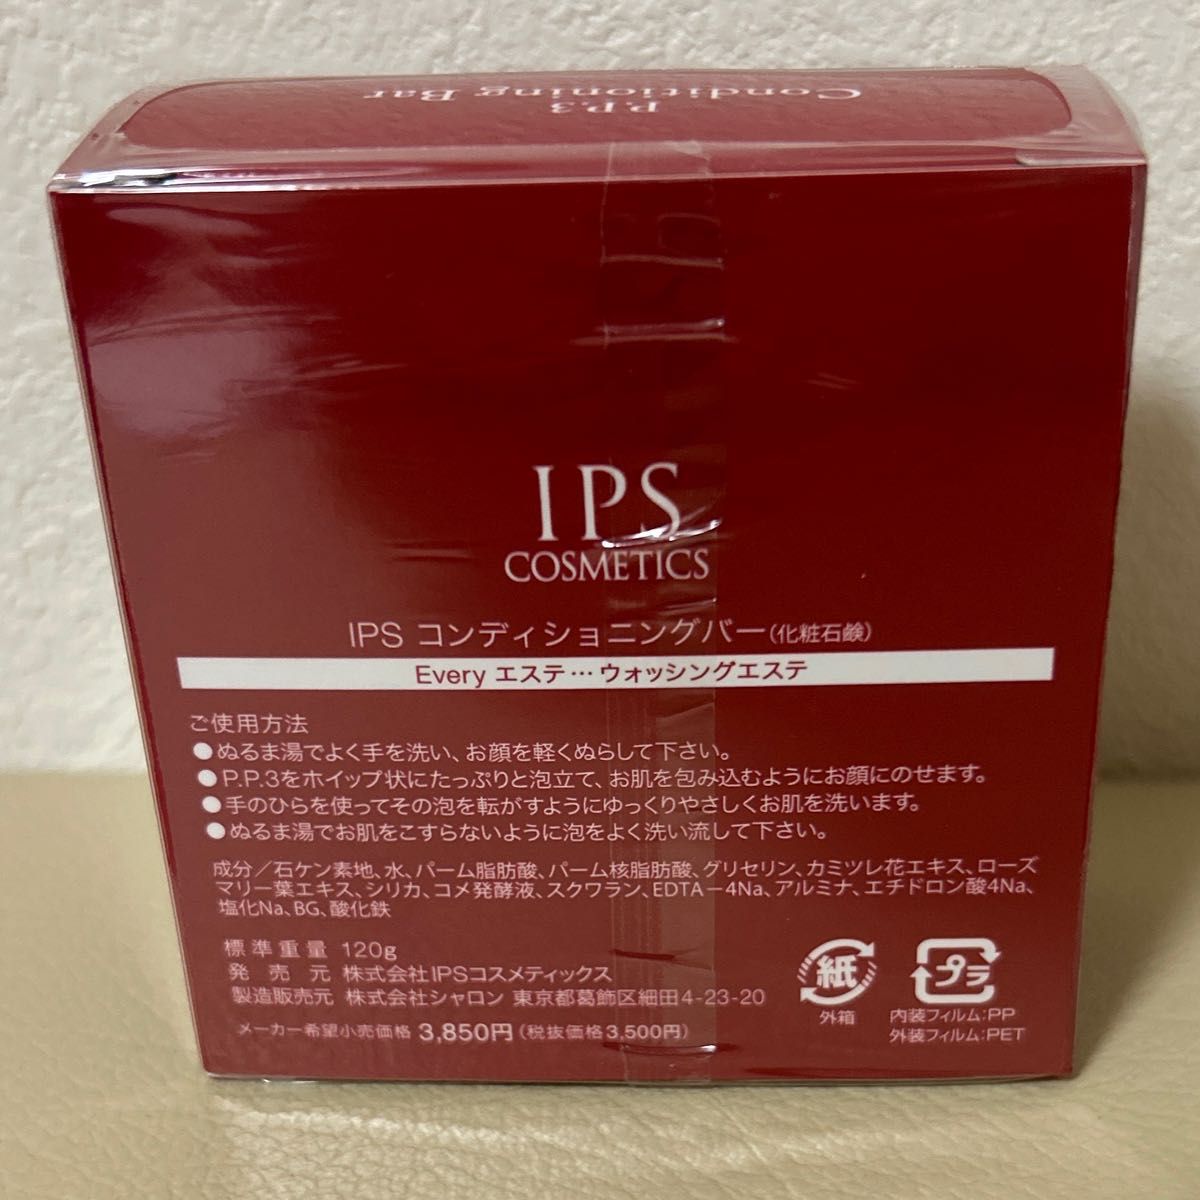 IPSコスメティックス P.P.3 コンディショニングバー 洗顔石鹸